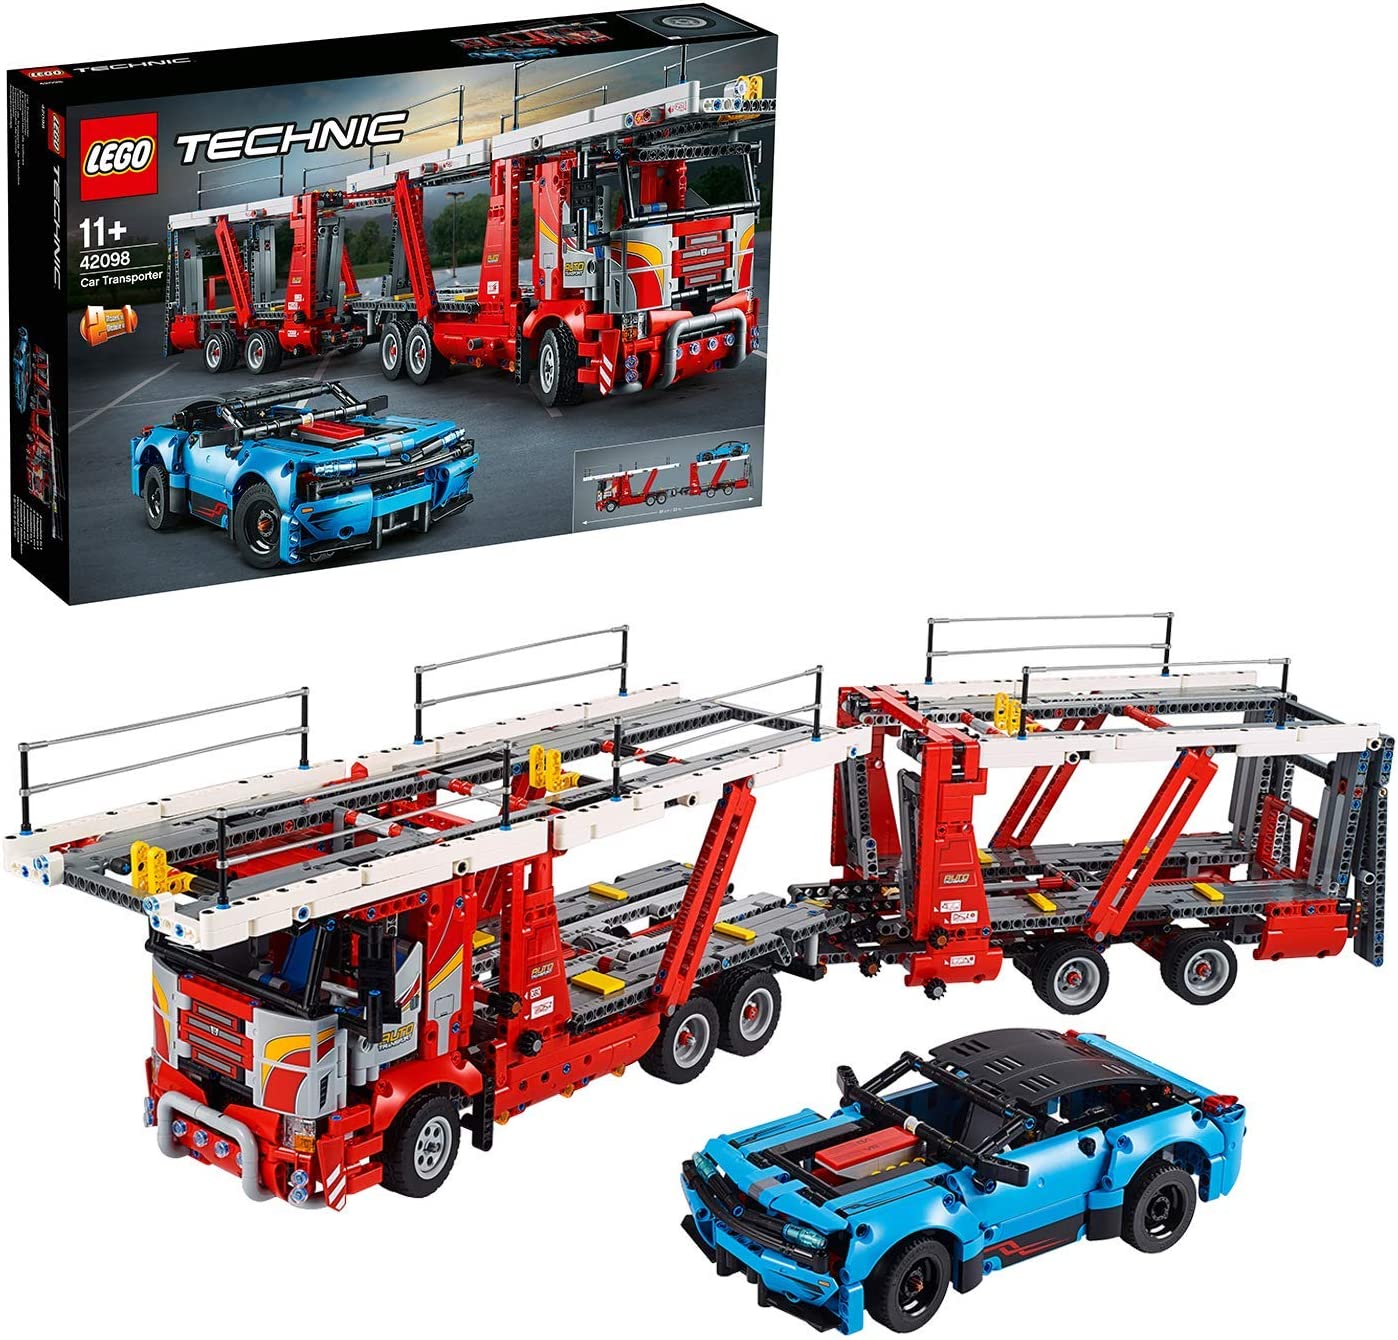 LEGO Car Transporter – 42098